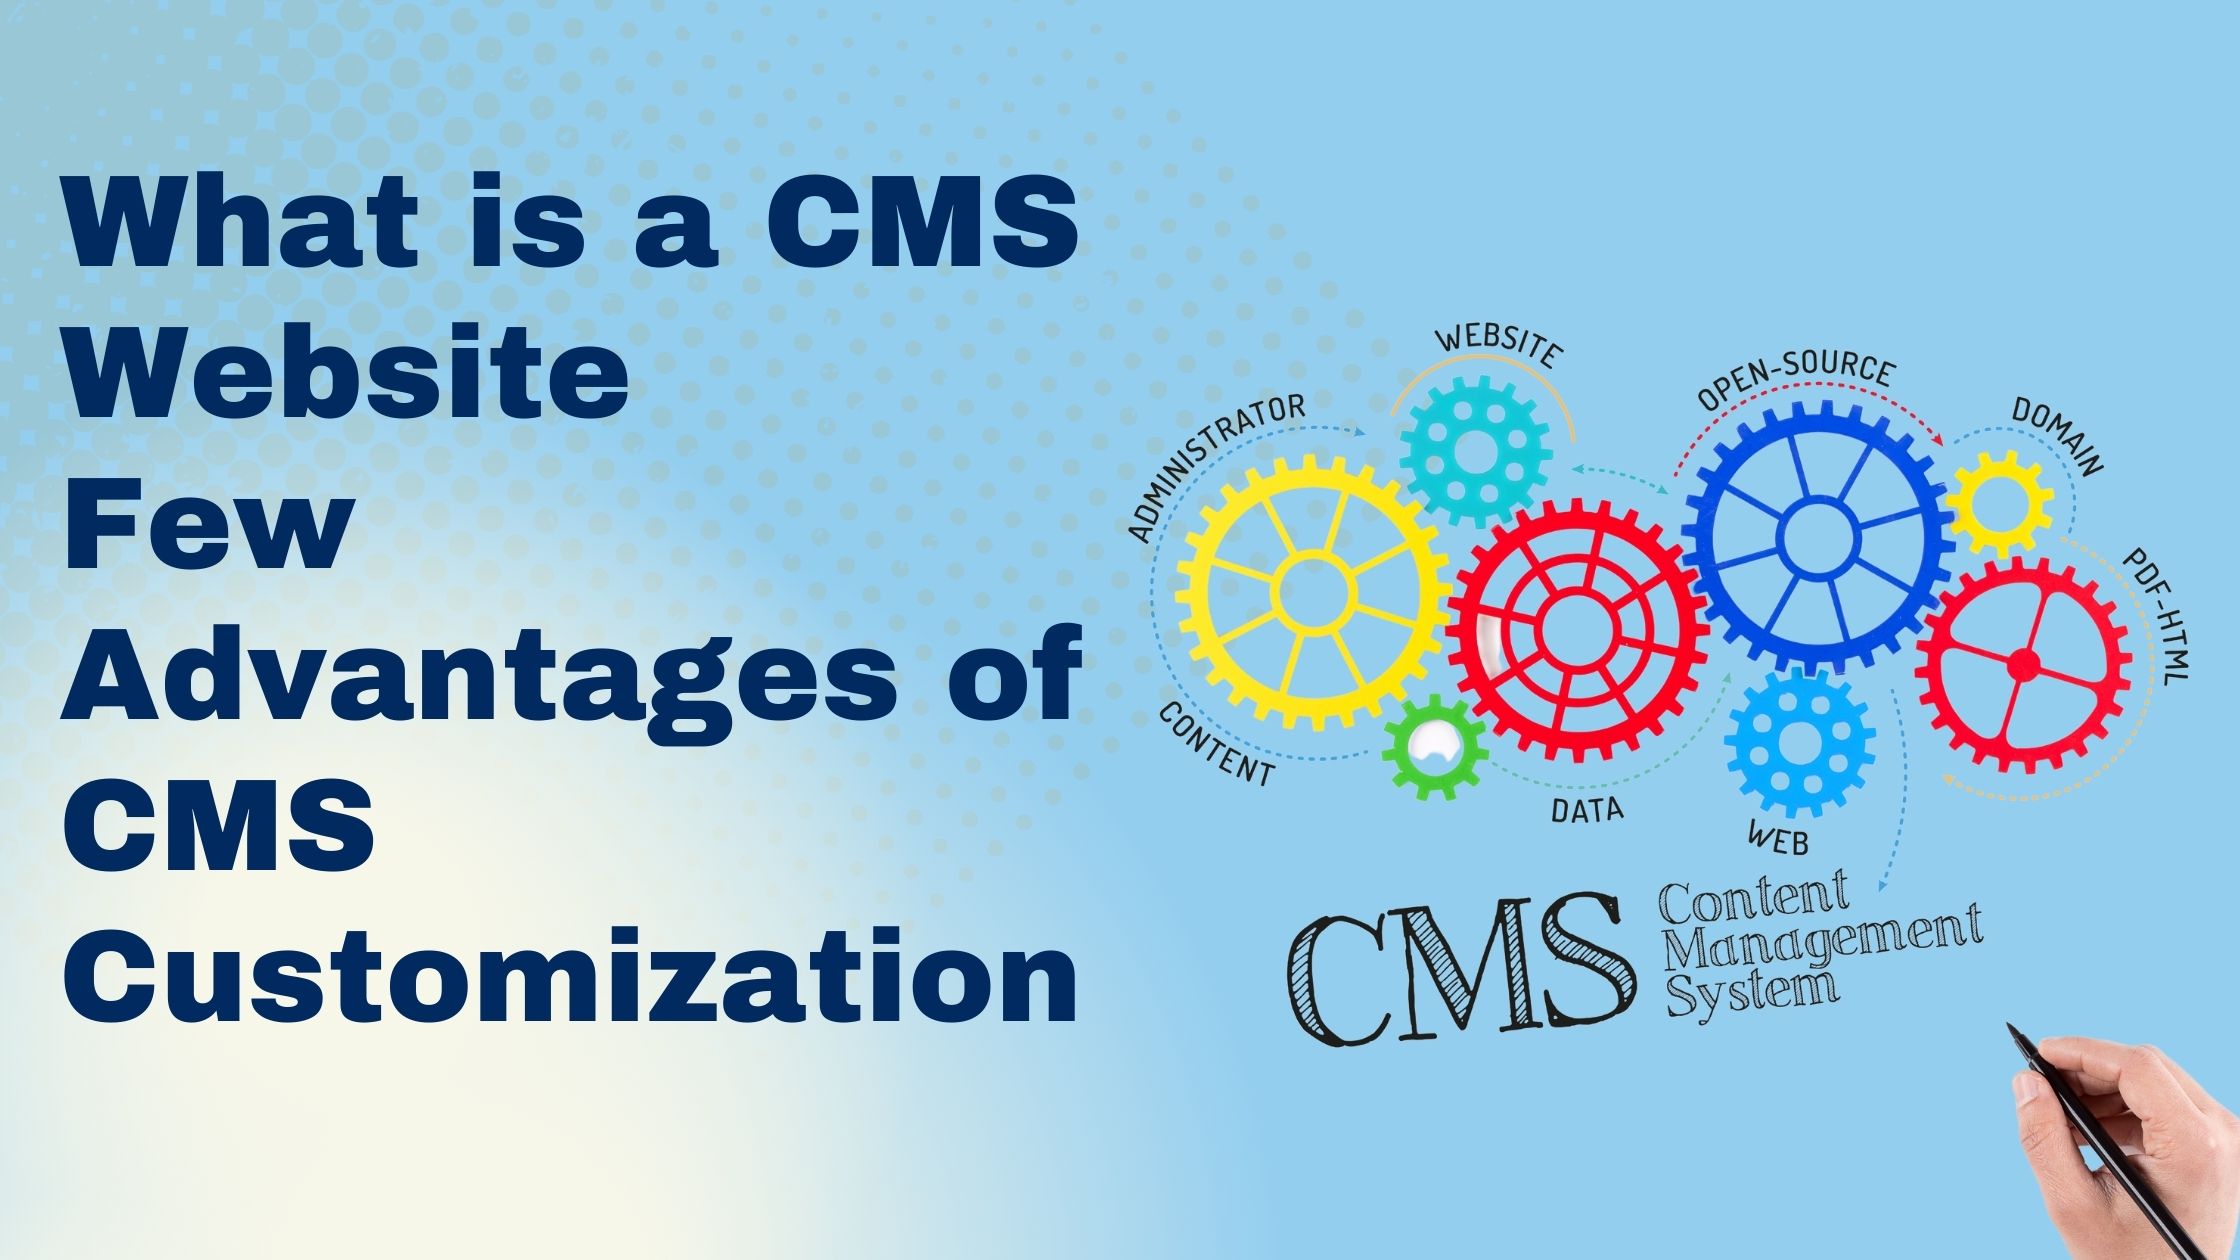 Few Advantages of CMS Customization